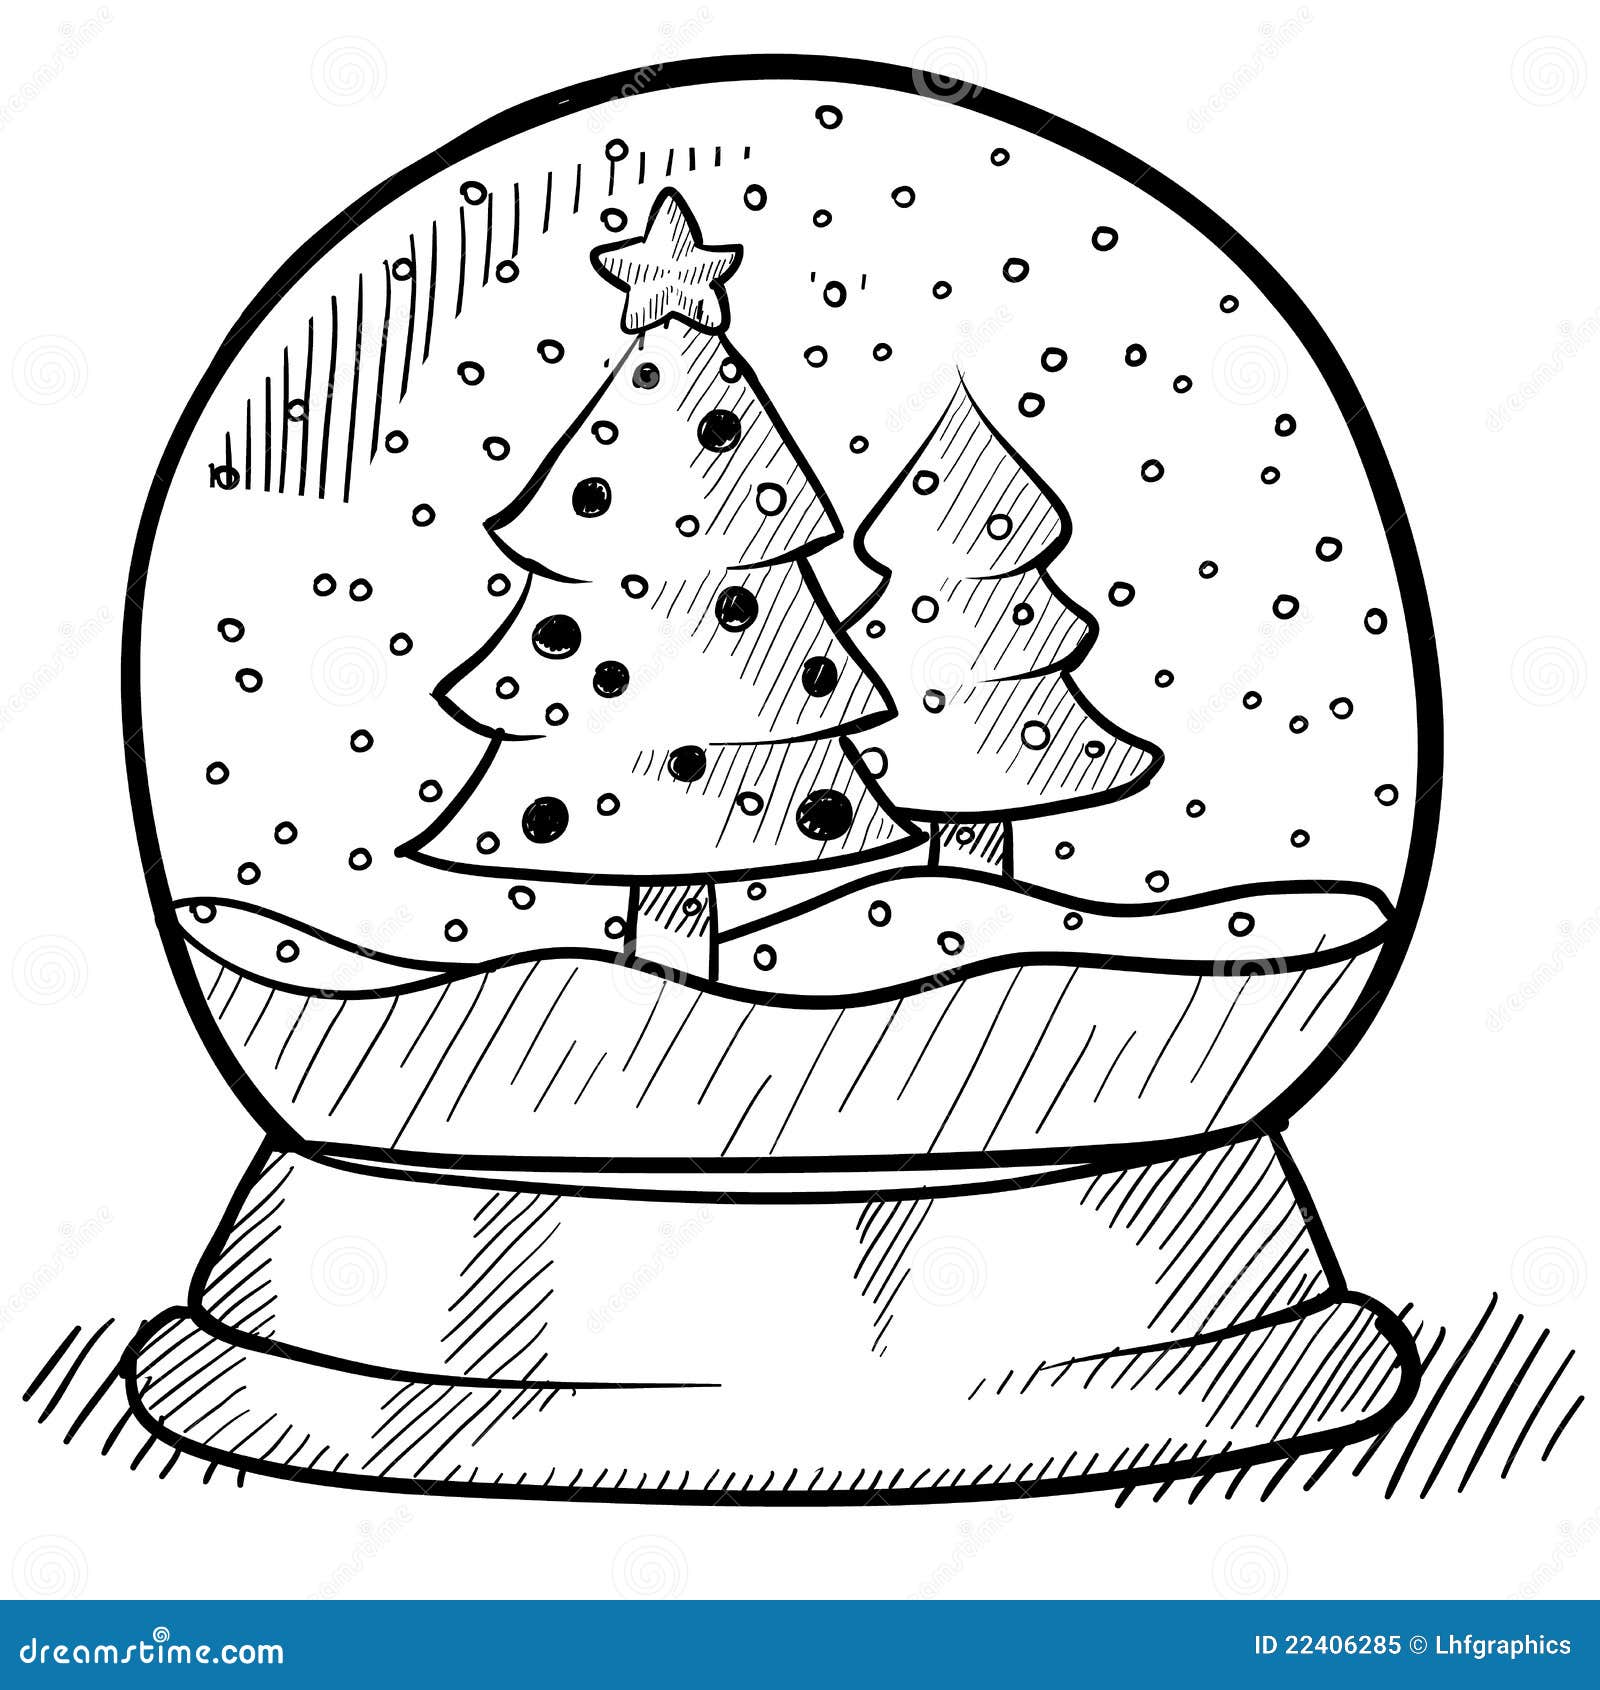 Snowglobe drawing stock vector. Illustration of tree - 22406285